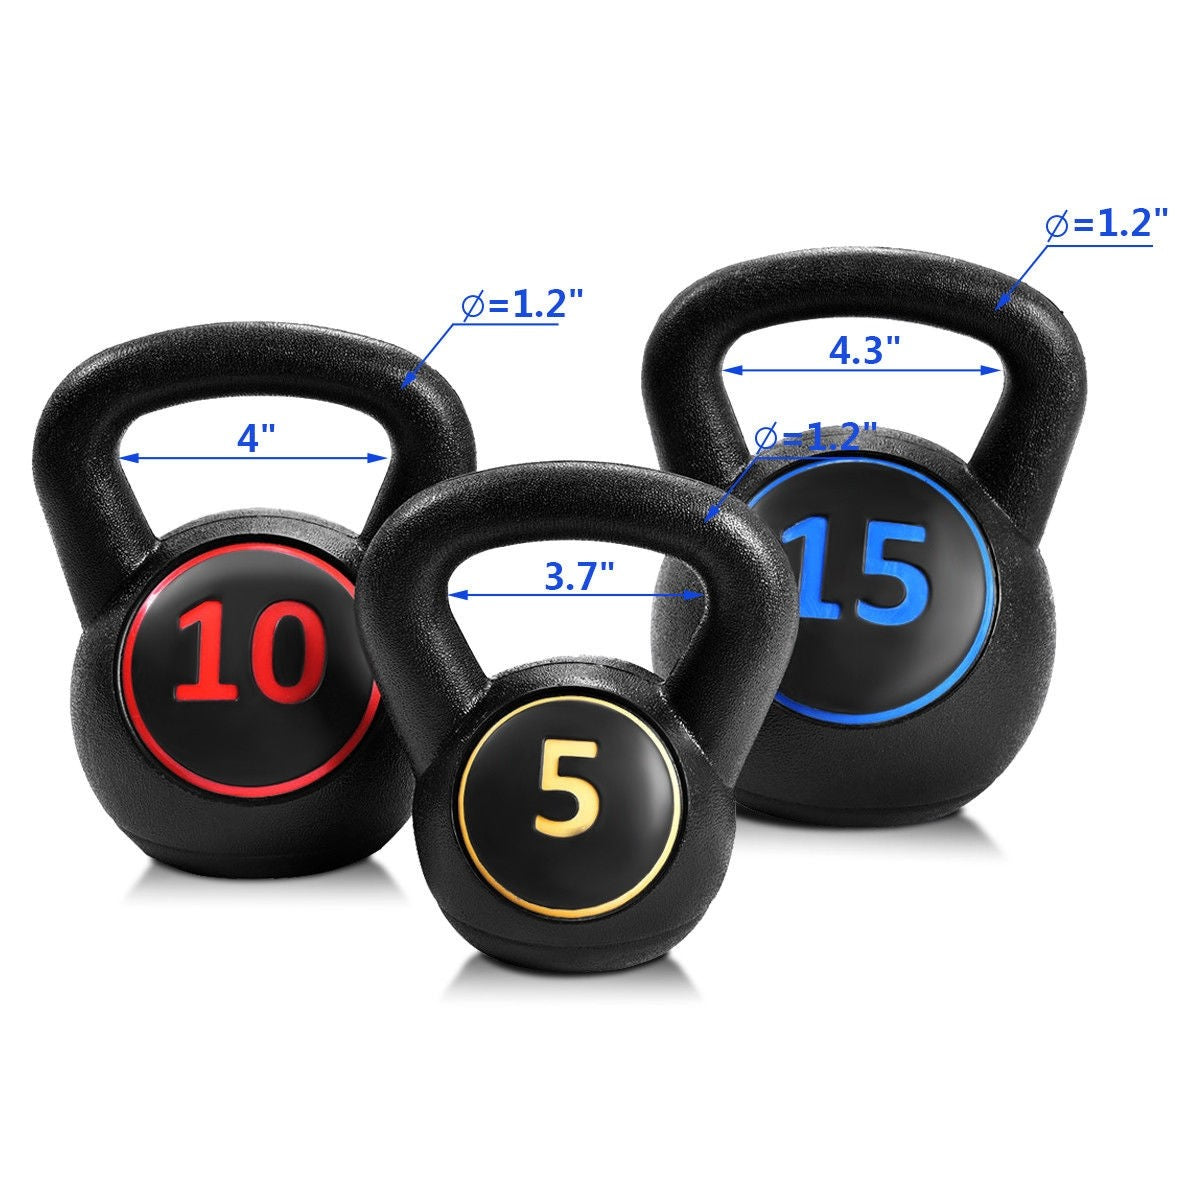 Giantex 3-Piece Kettlebell Weights Set, Weight Available 5,10,15 lbs????o?Black - Giantexus